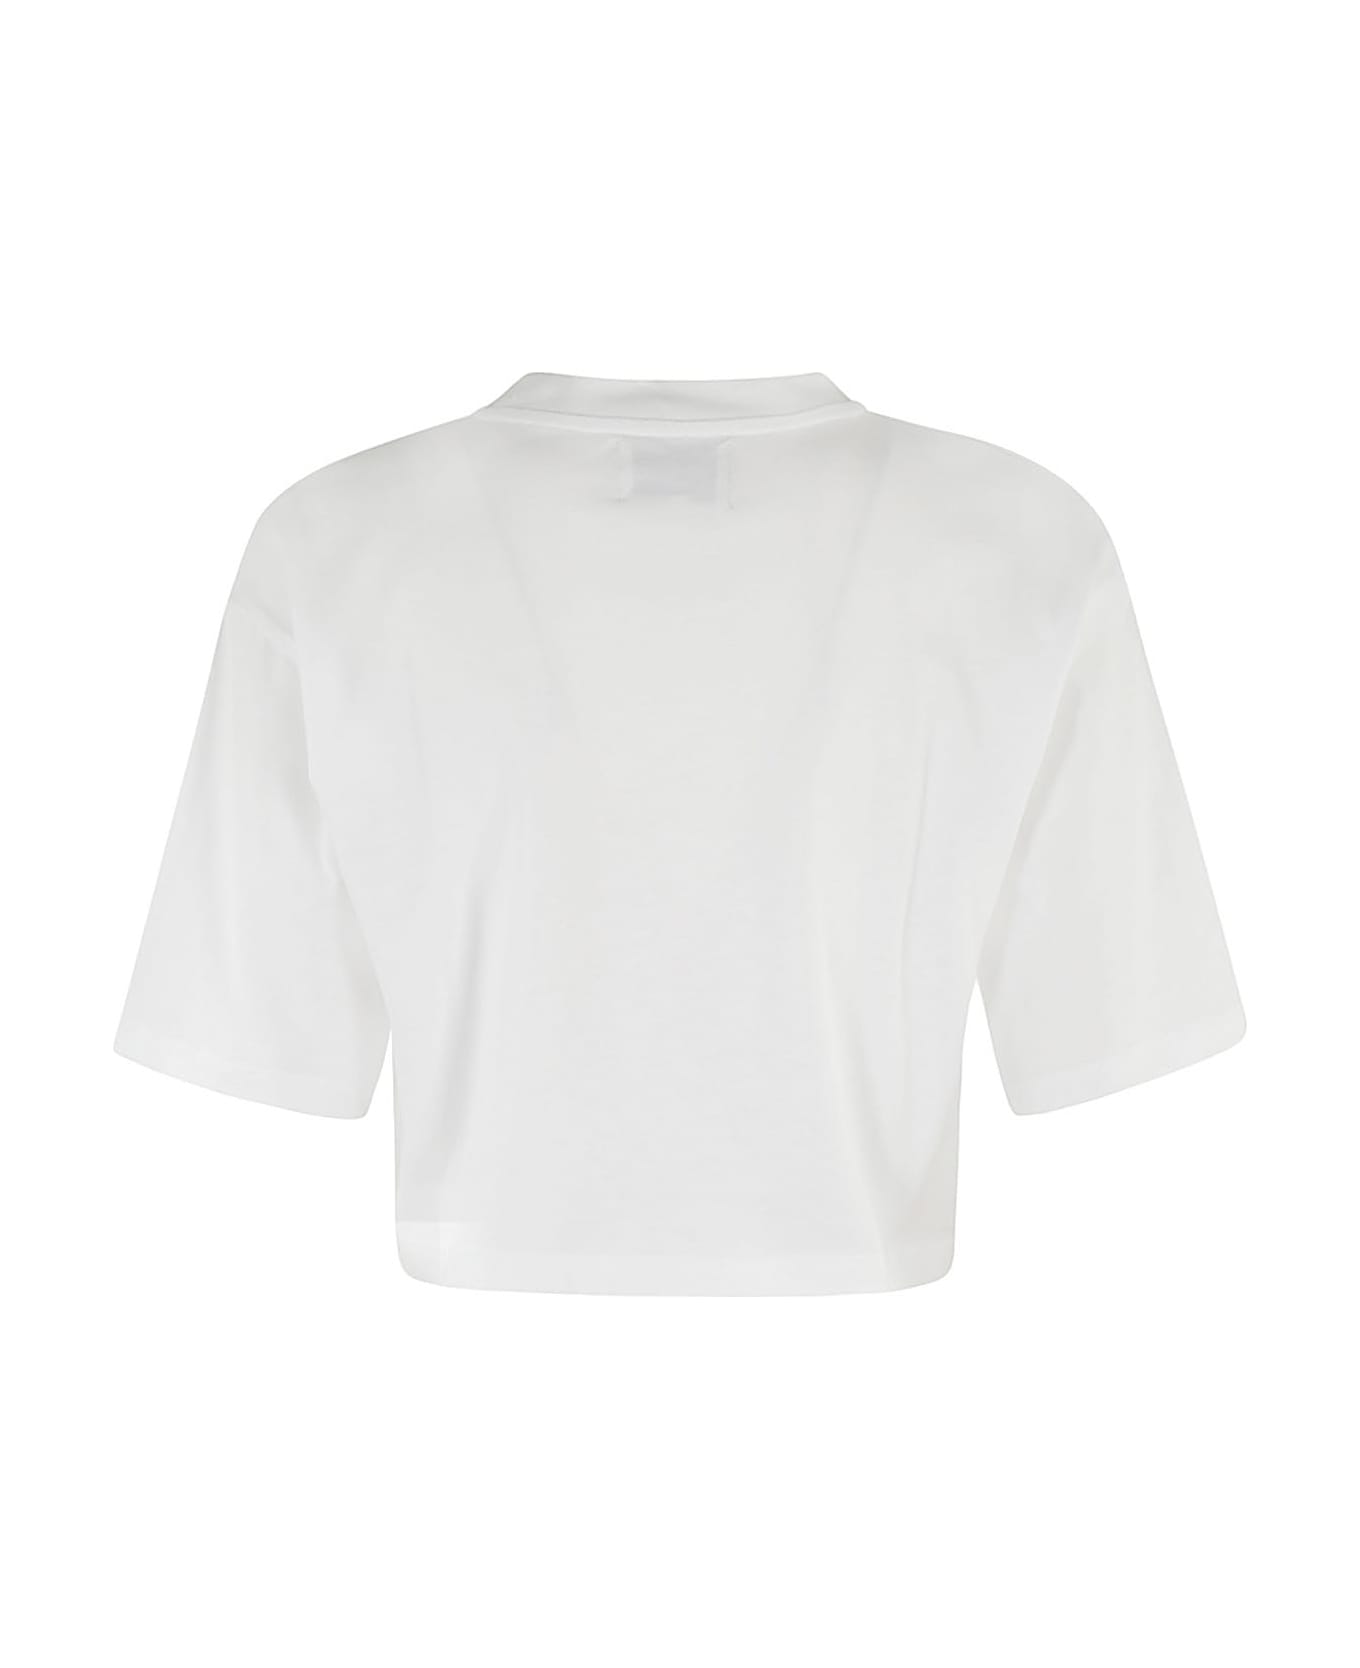 Loulou Studio Cropped Tshirt - White